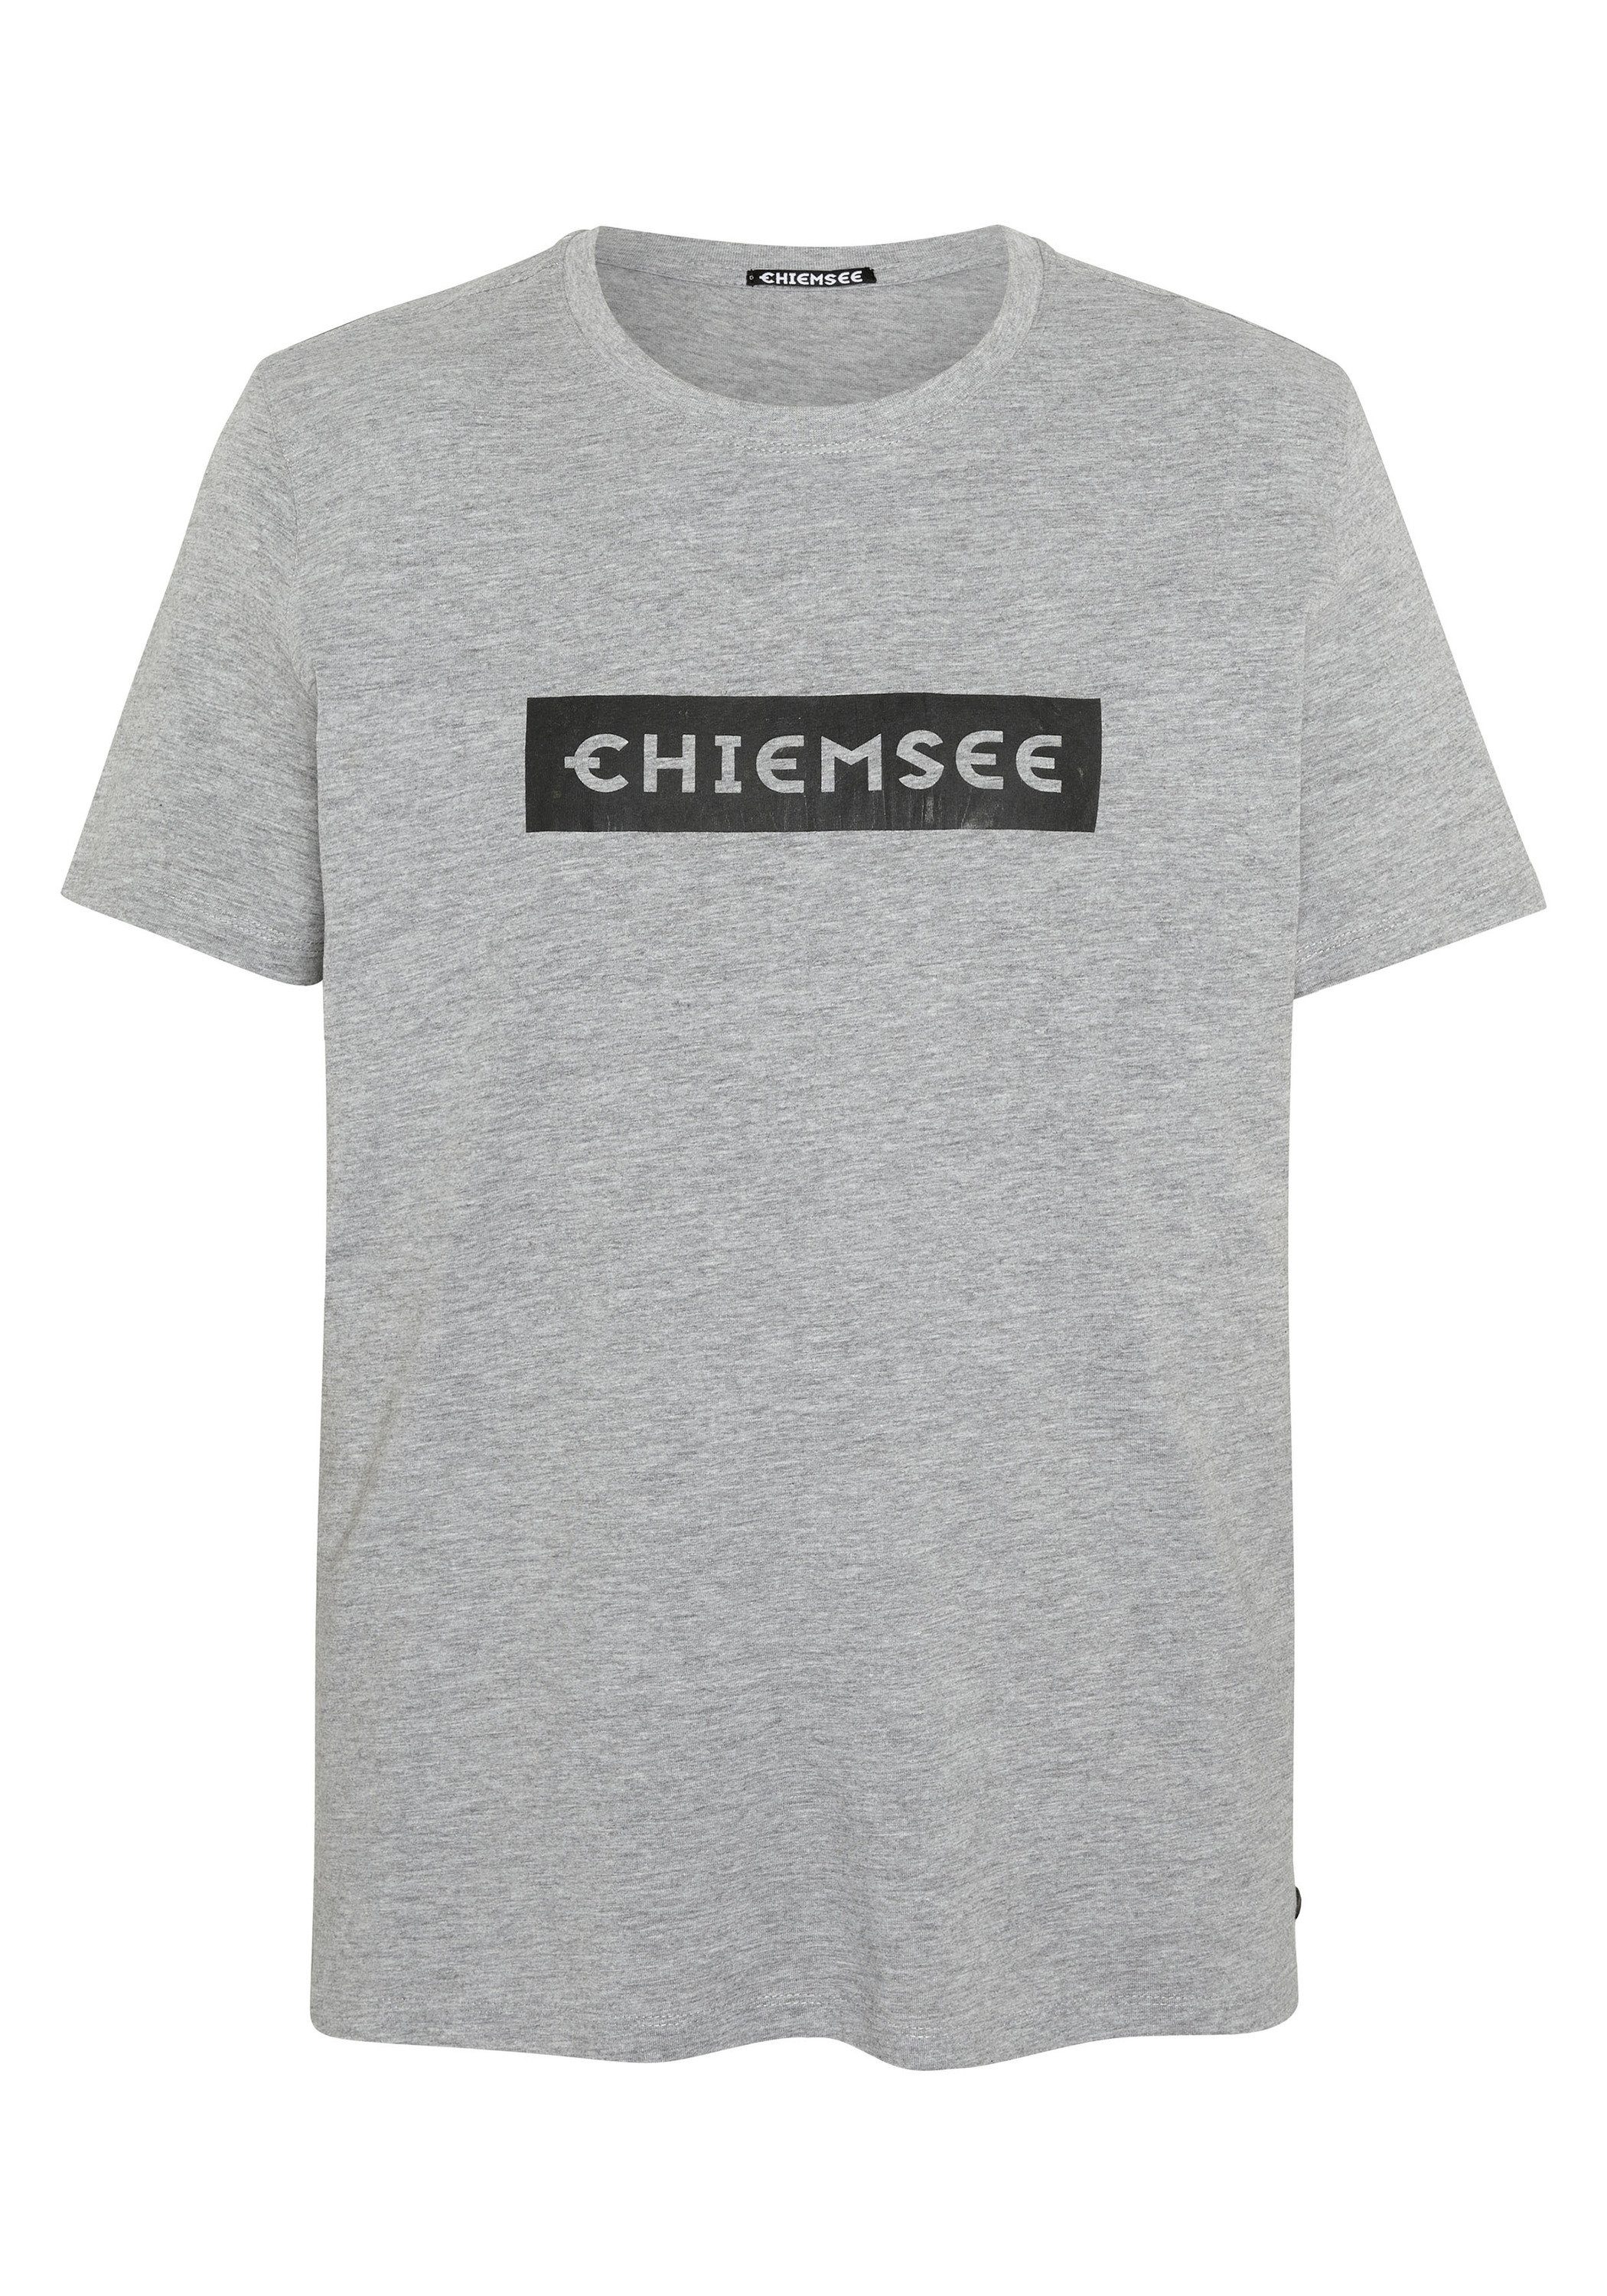 Chiemsee Print-Shirt T-Shirt mit Label-Schriftzug 1 17-4402M Neutral Gray Melange